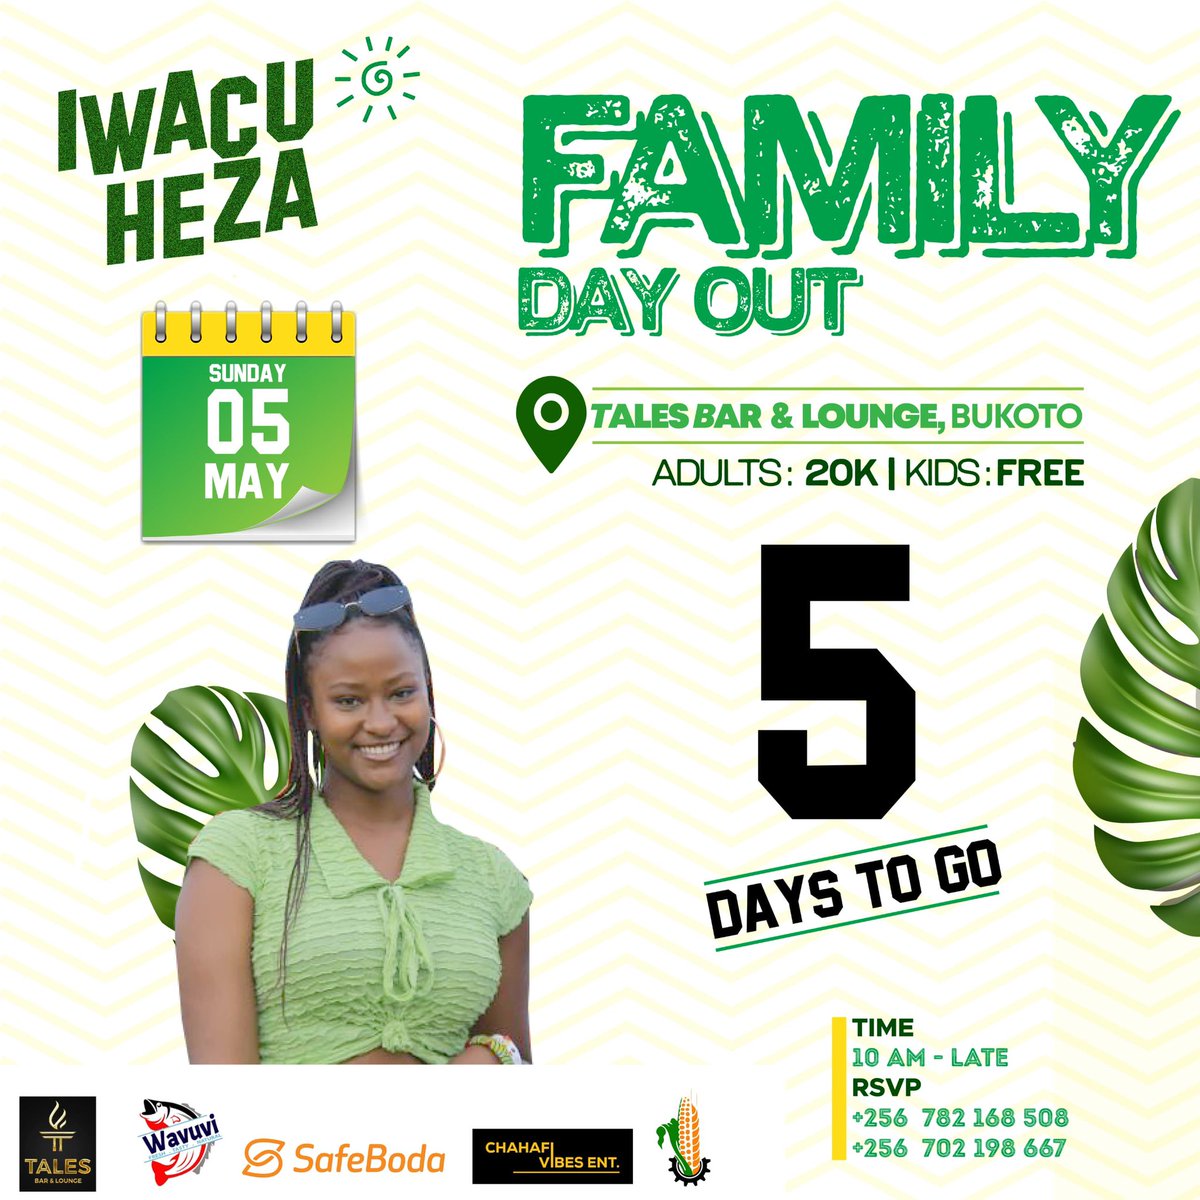 We are left with just 5 days
Dont miss
Come let’s family bond 

#FamilyDayOut
#IwacuHeza
#TweseTuribamwe